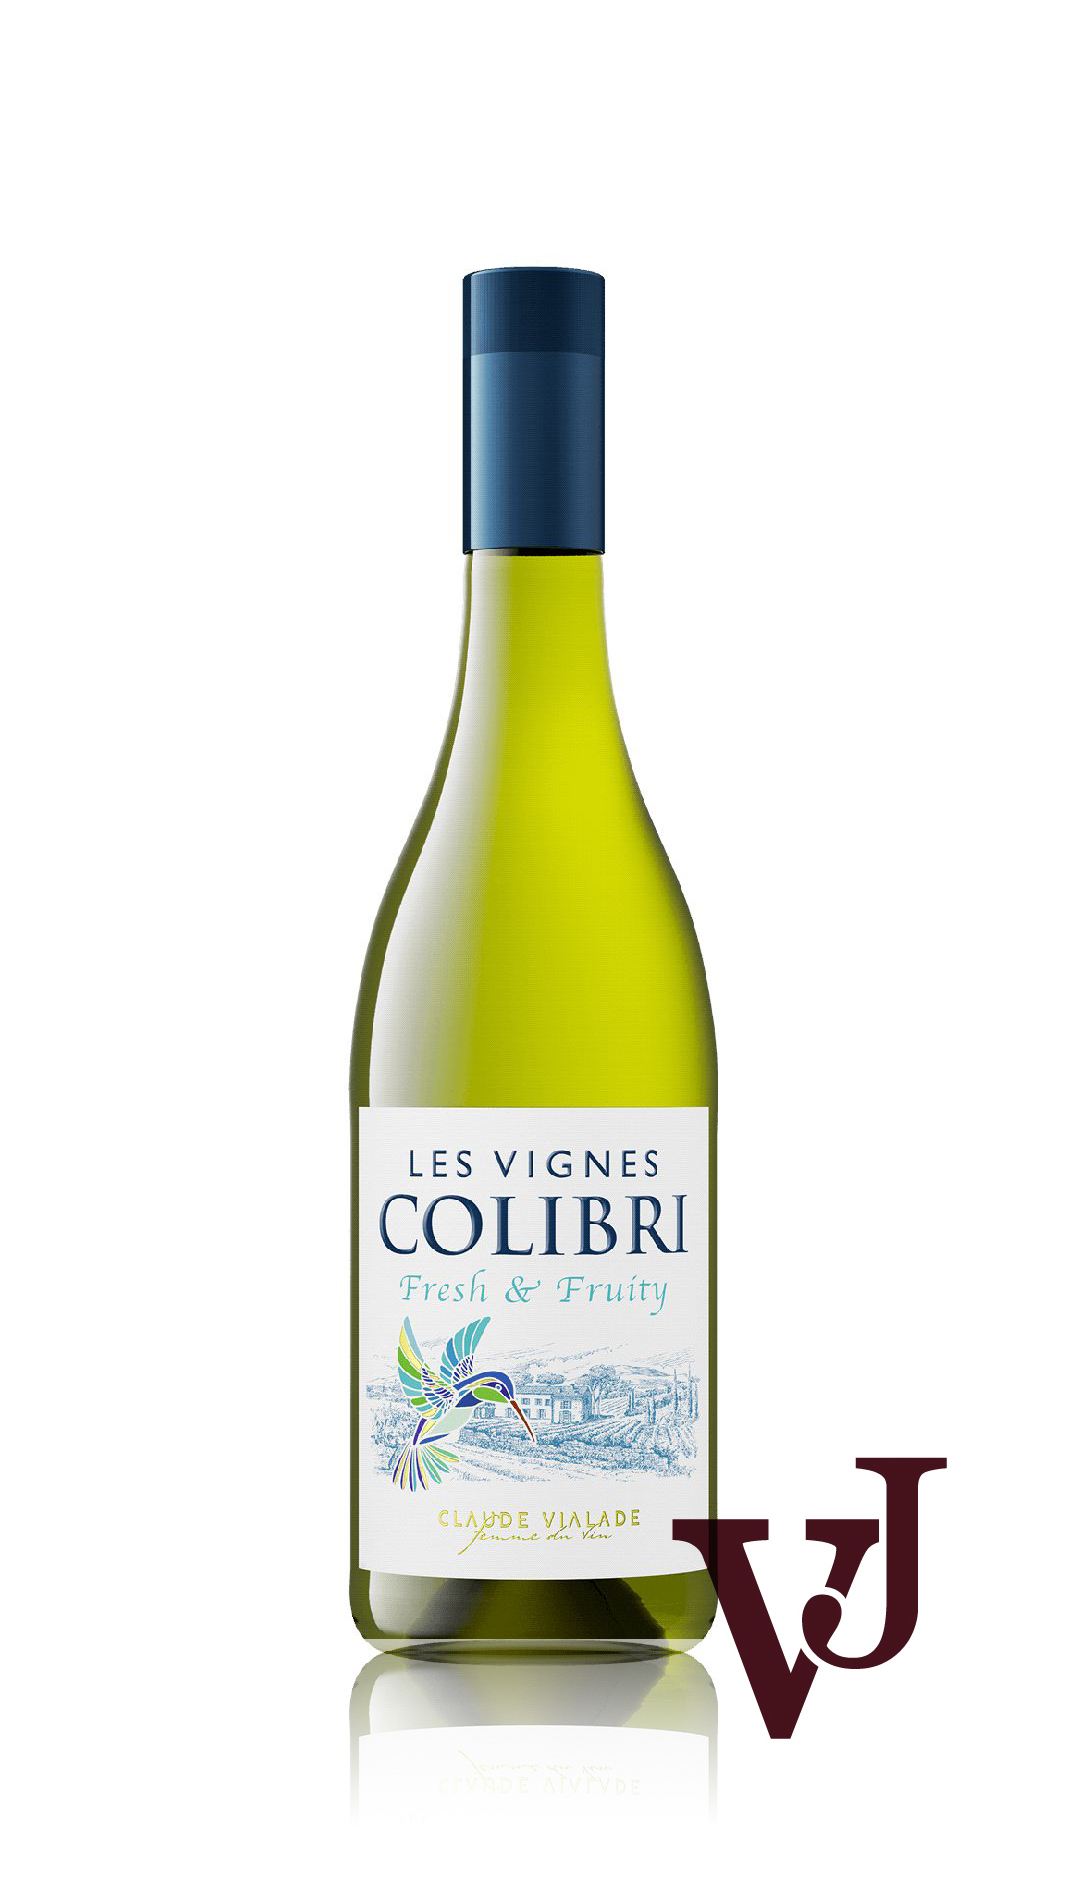 Vitt Vin - Colibri Muscat Vermentino artikel nummer 669801 från producenten Les Vignerons des Coteaux Sud från området Frankrike - Vinjournalen.se